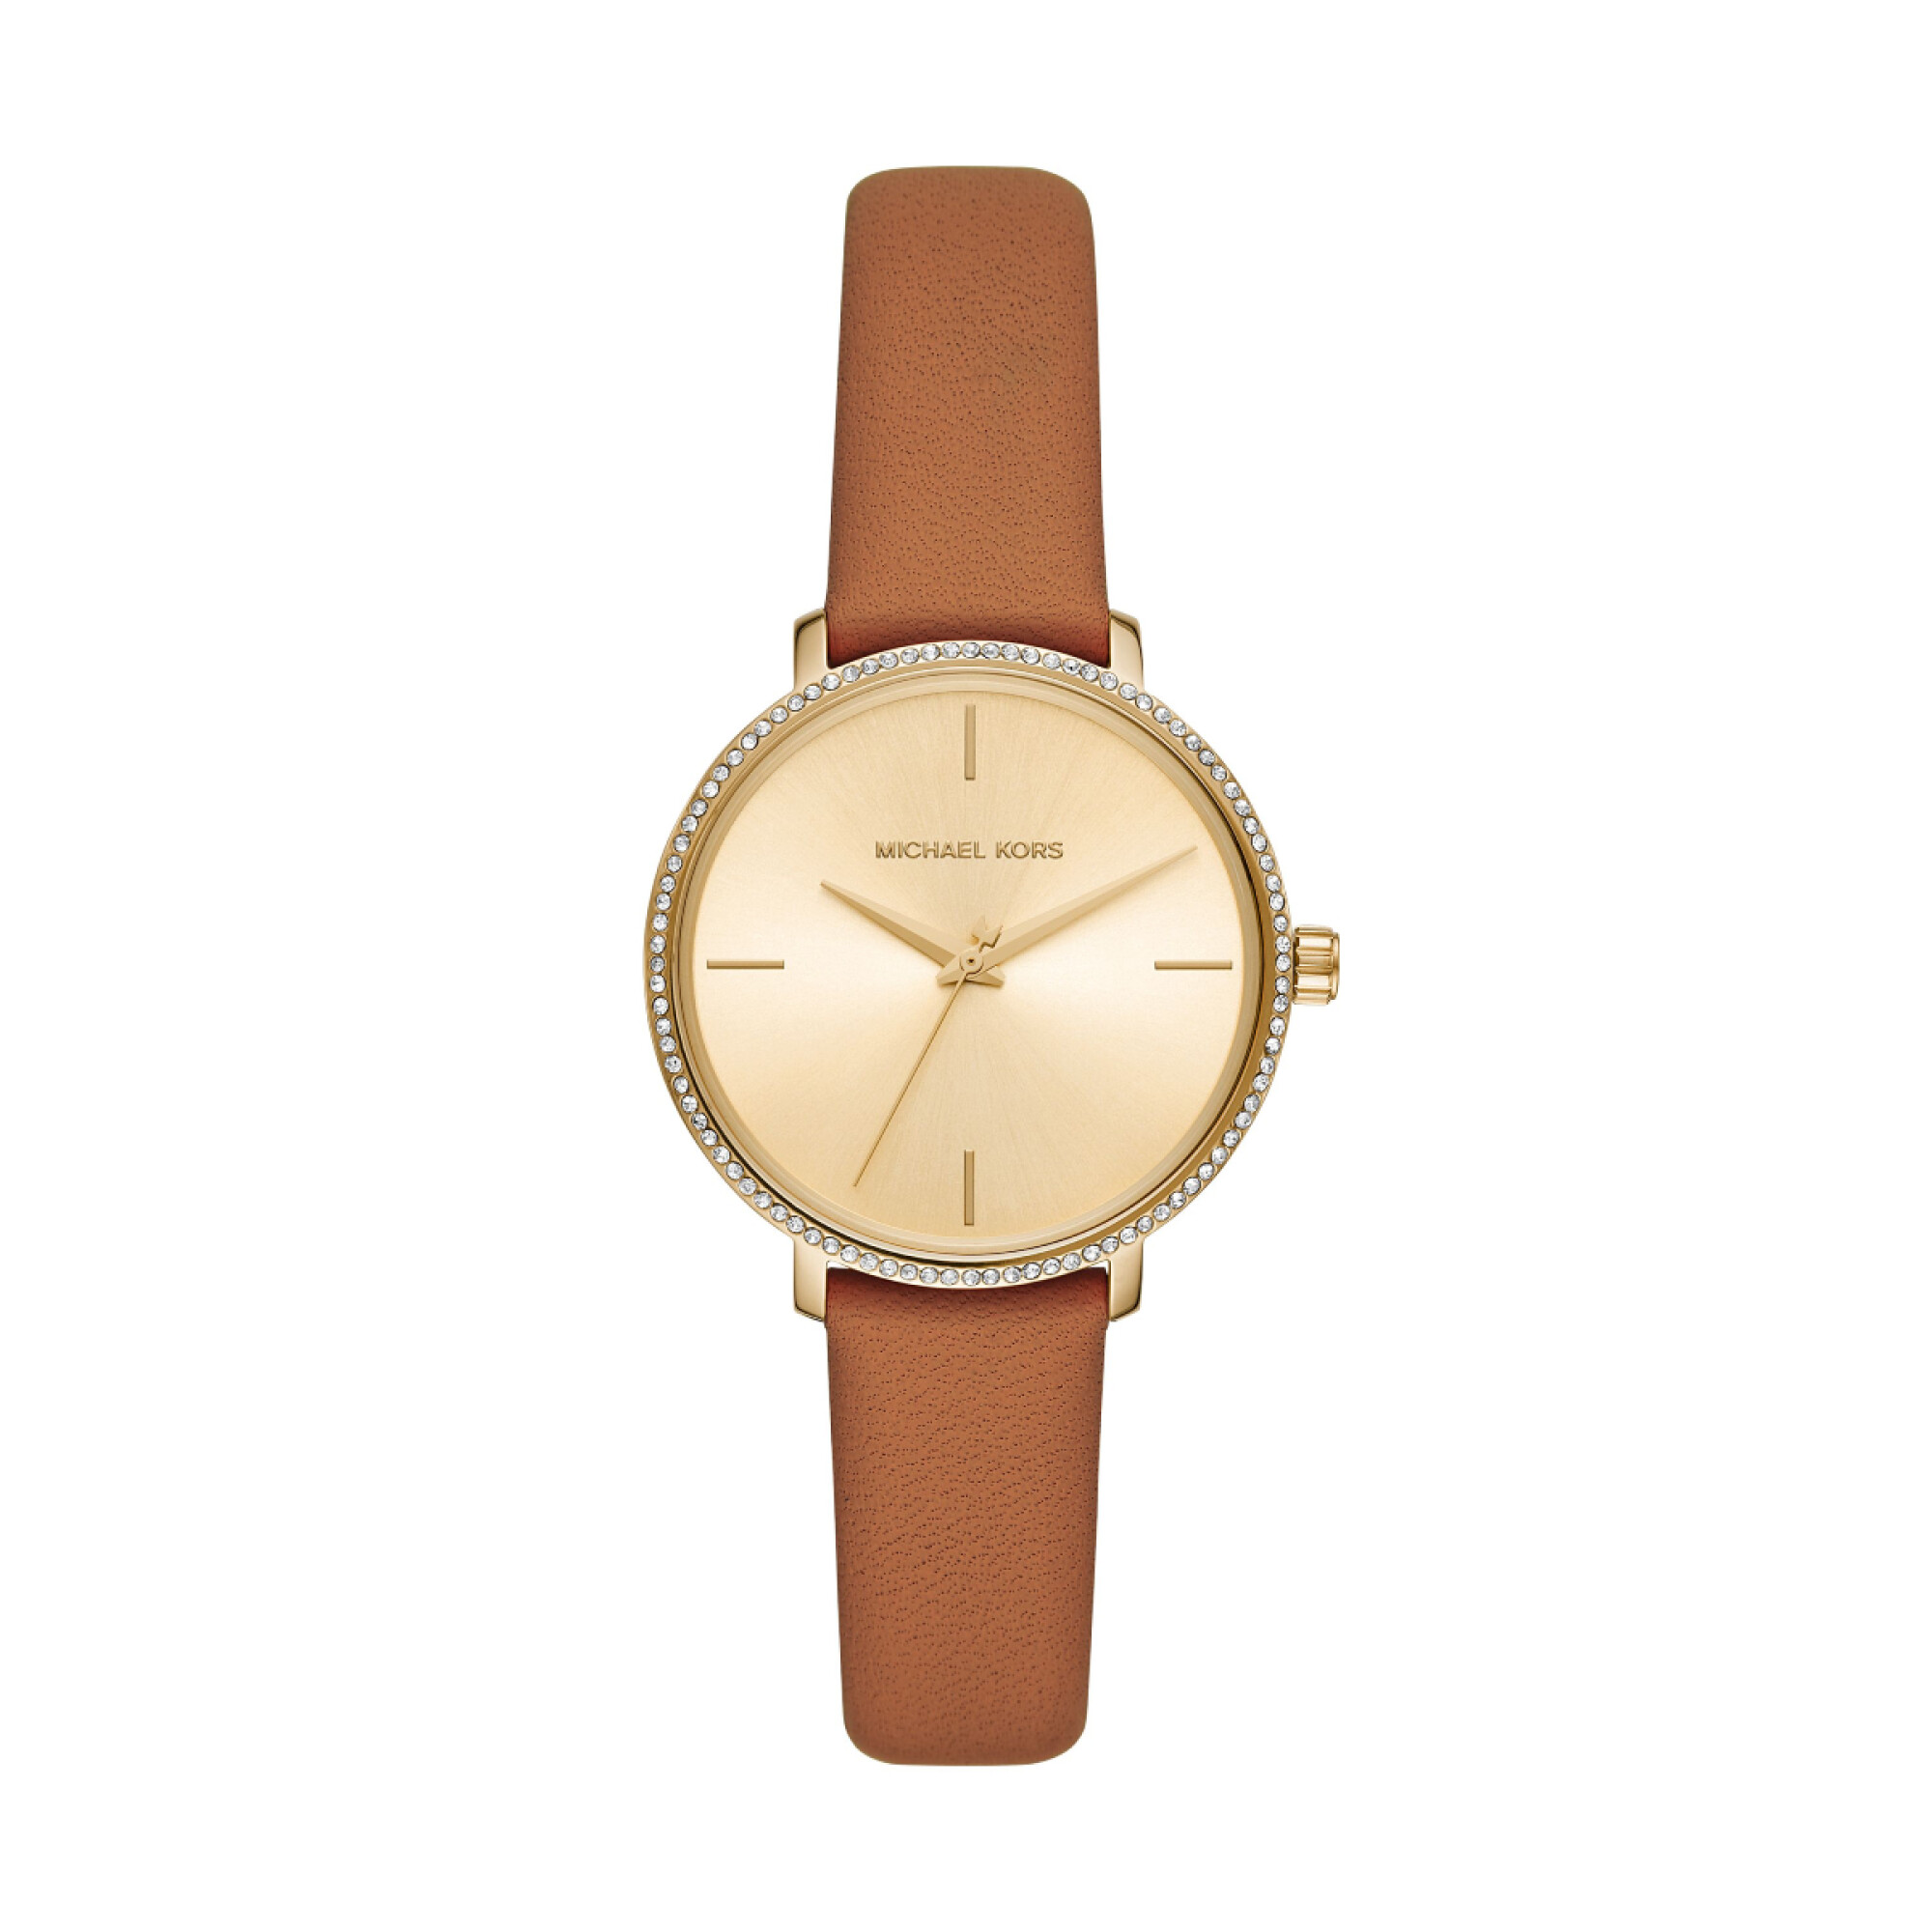 Reloj Diesel Fashion Cuero Marron — WatchMe